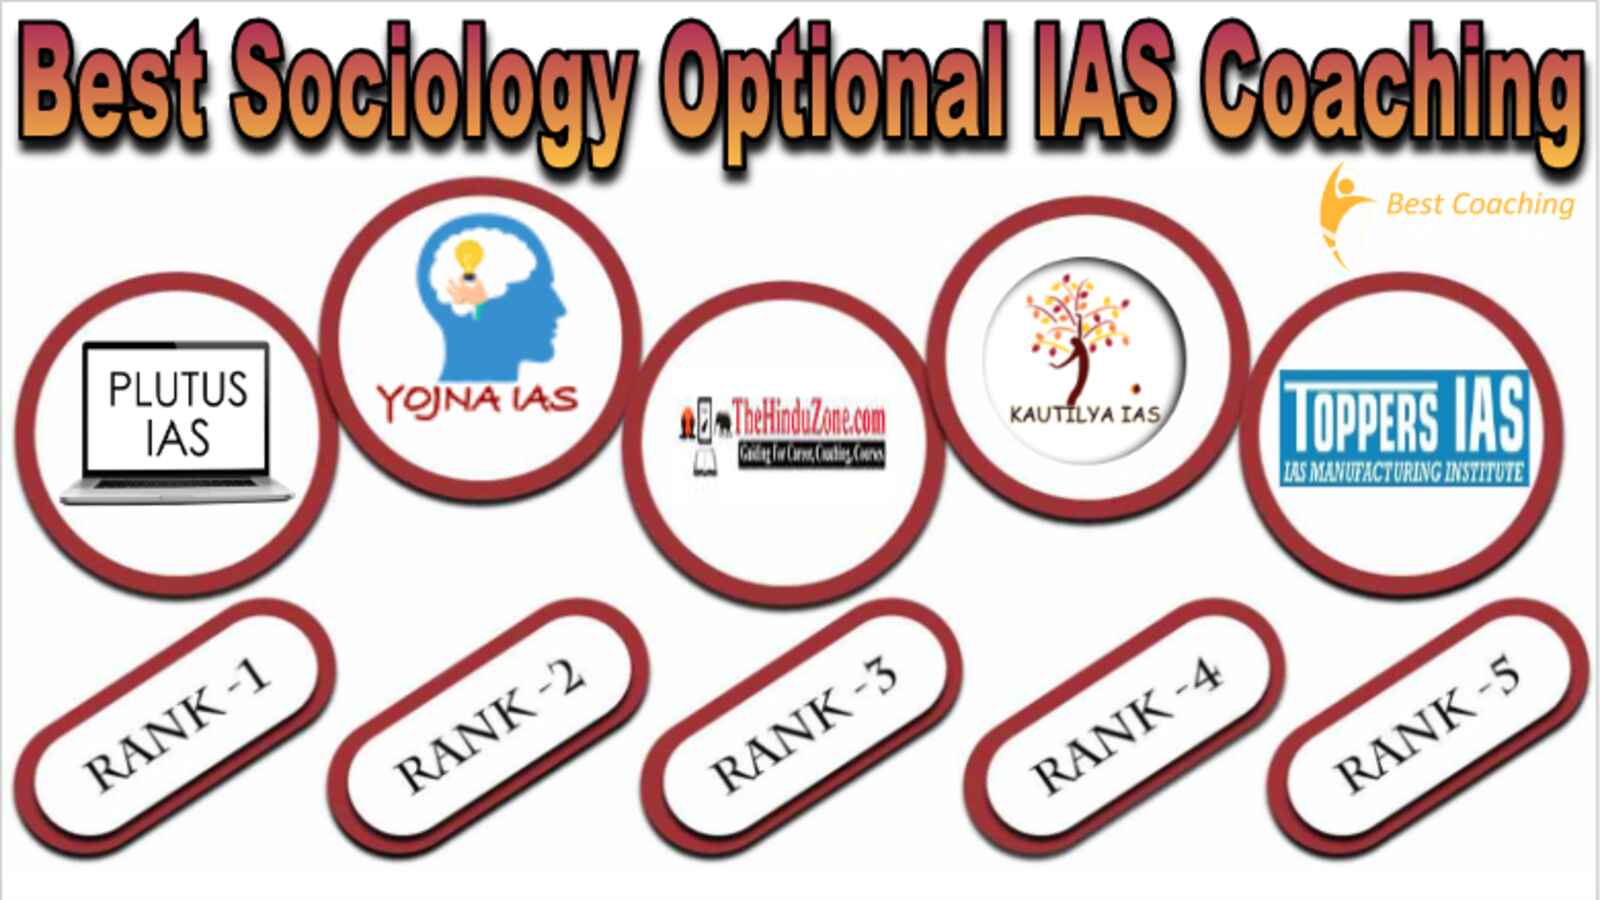 Best Sociology Optional IAS Coaching